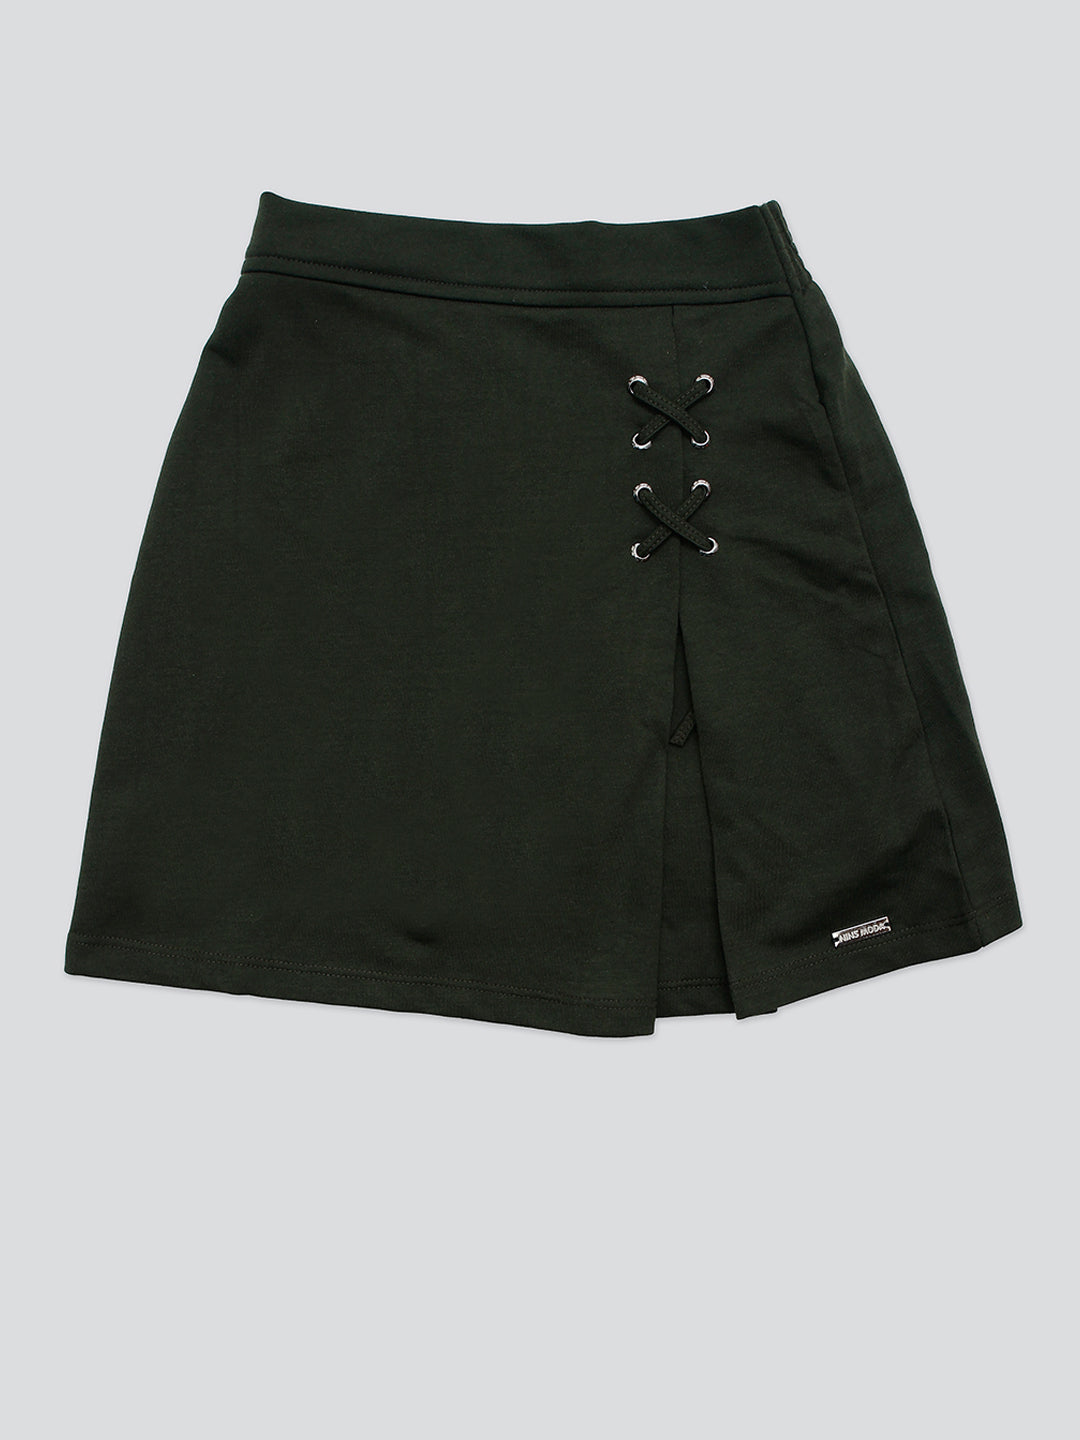 Pampolina Girls Solid Skirt- Olive